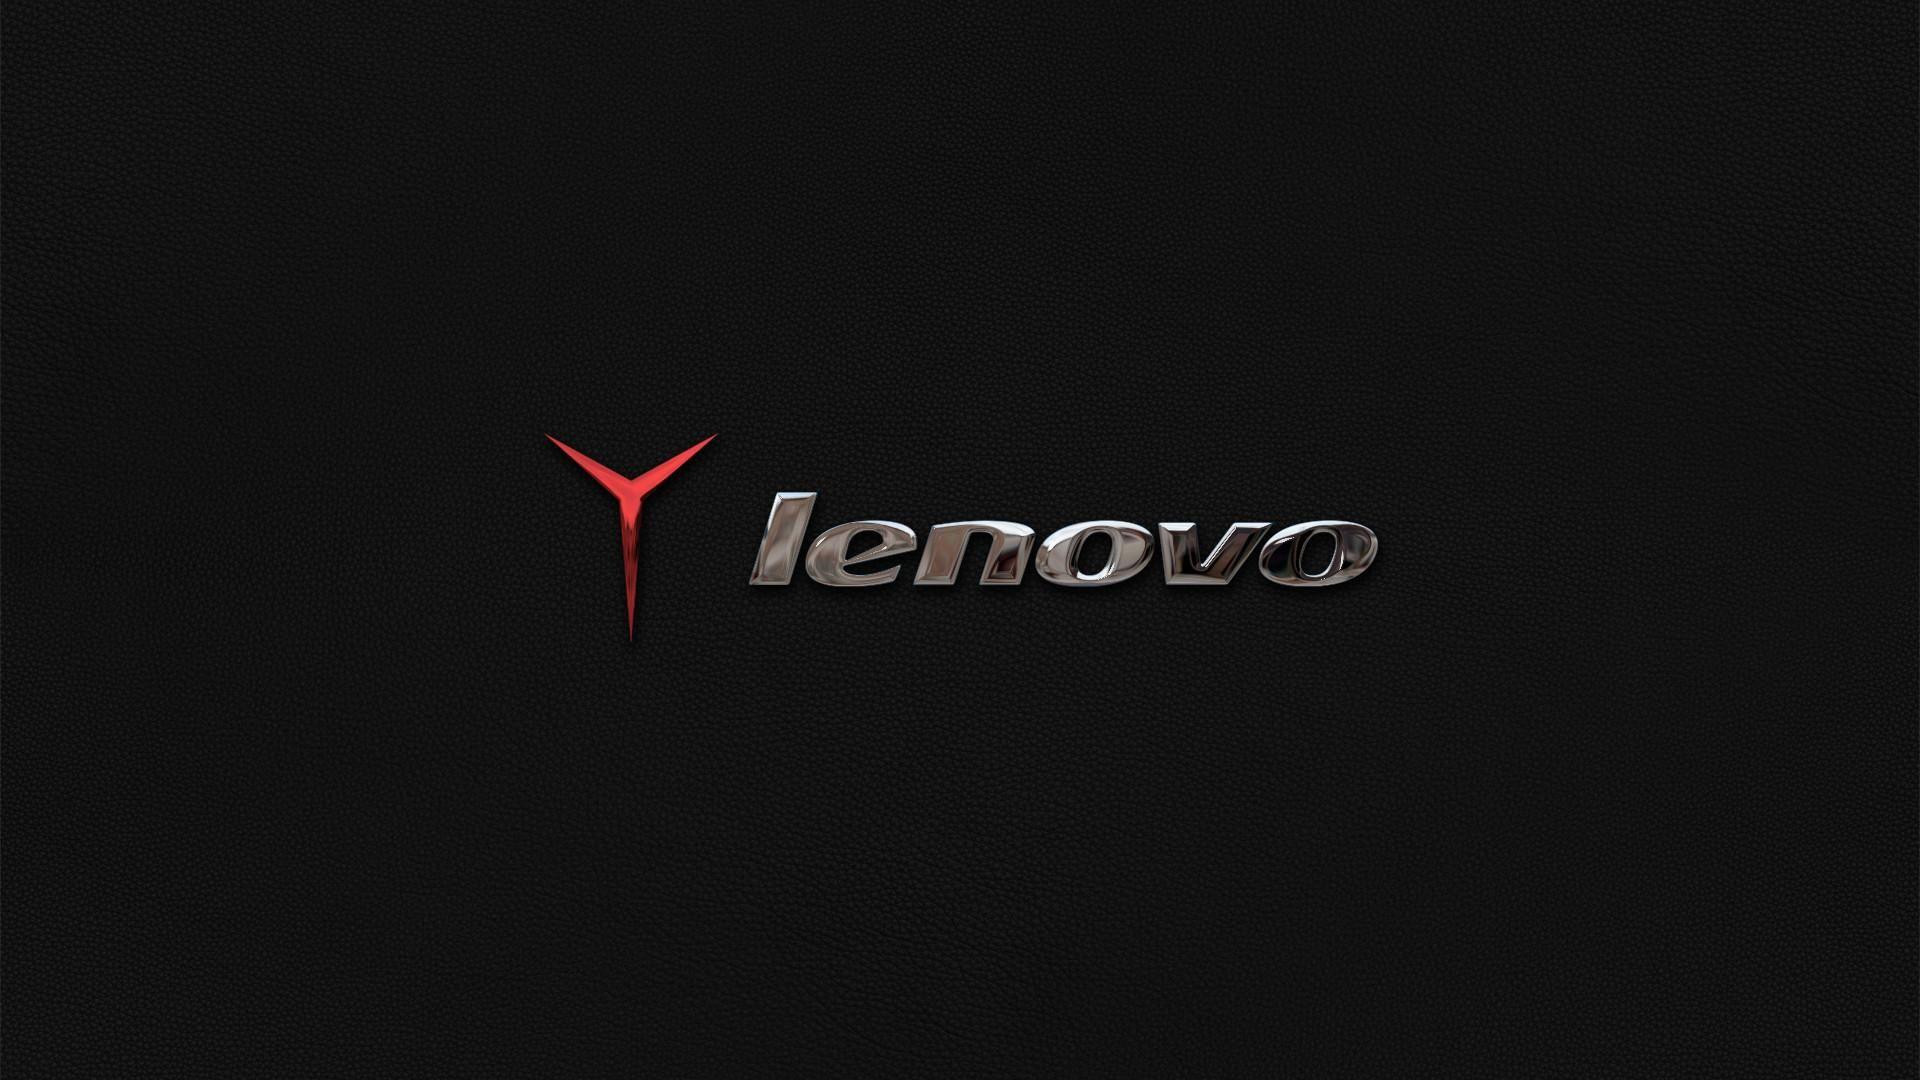 Lenovo Full HD Wallpapers - Top Free Lenovo Full HD Backgrounds ...